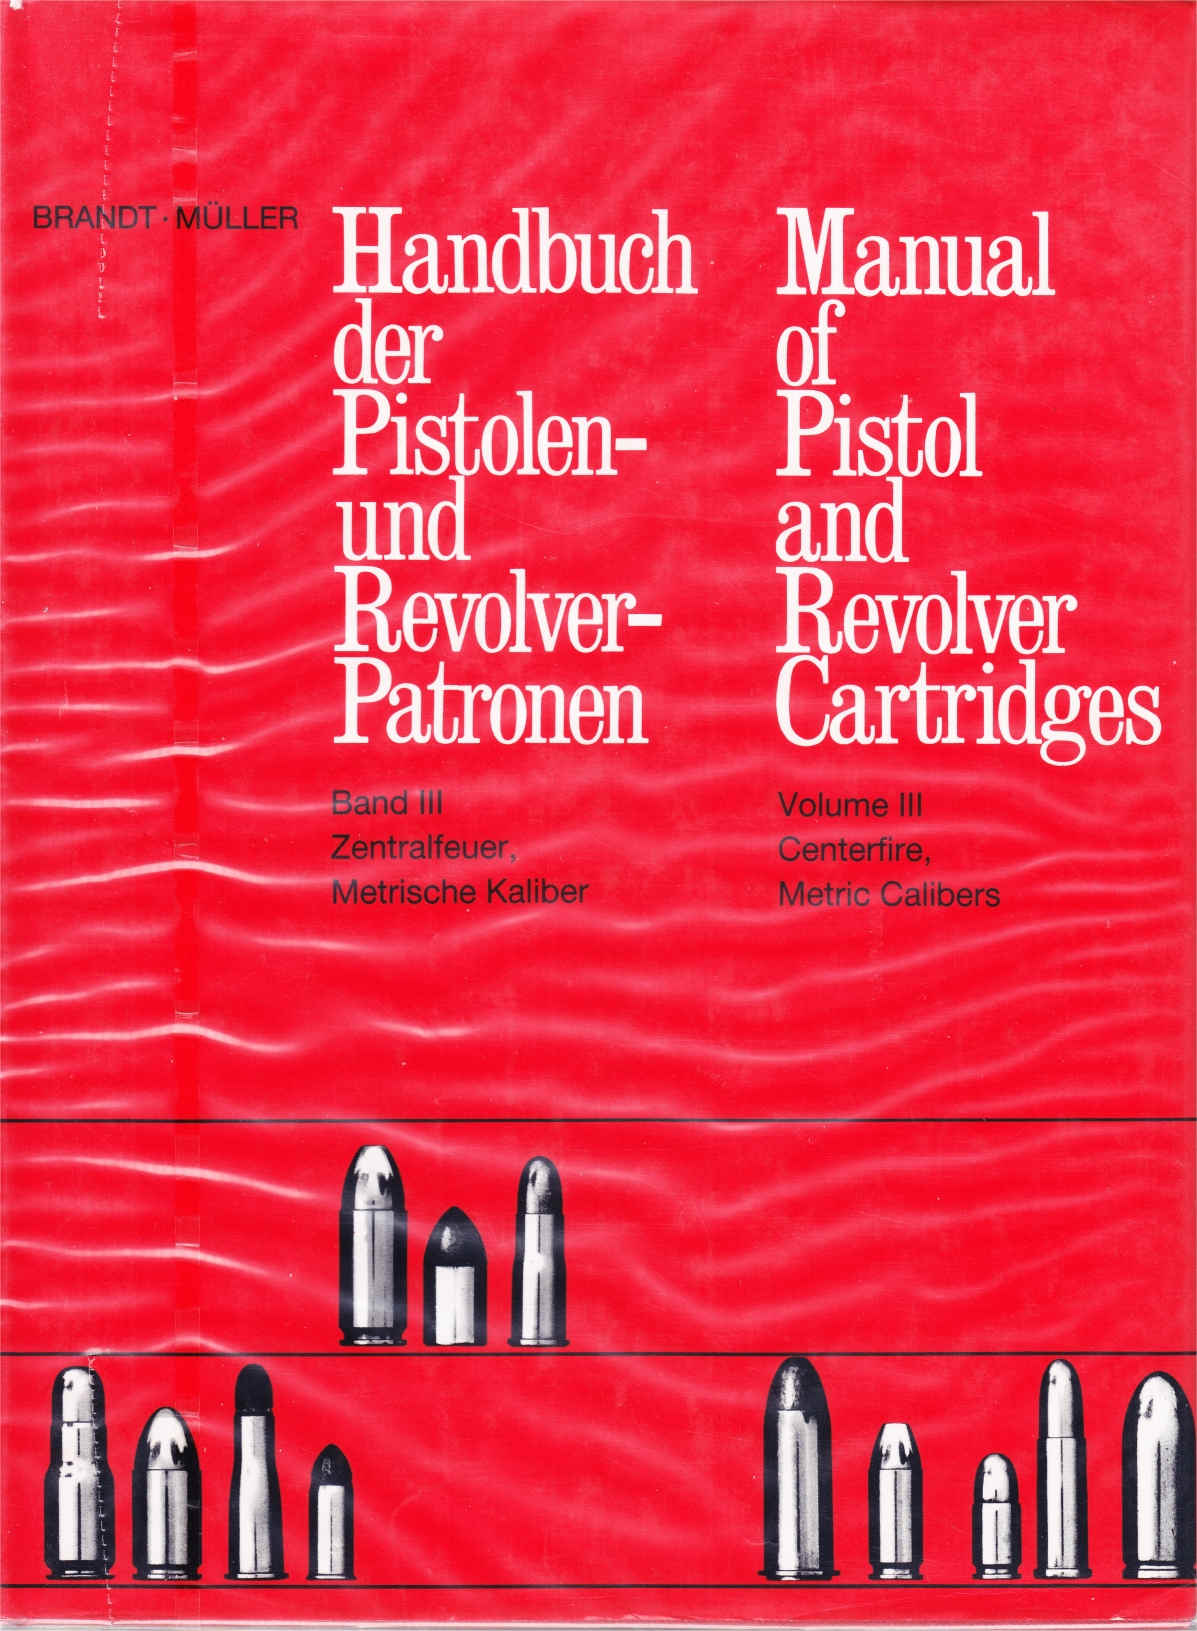 Brandt Manual of pistol and Revolver Cartridges Ed.1 Vol.3 